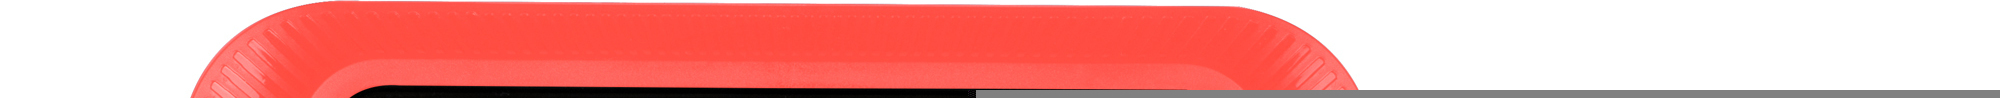 Altavoz Ngs Roller lingo red 20w bluetooth wifi lector de tarjetas microsd luces led 7 horas autonomía. rojo 1200mah elecspk0538 usbmicrosd 7h sdaux portable bt con tecnología 5.0 y true wireless stereo para karaoke incorporadas inentrada compatible 9